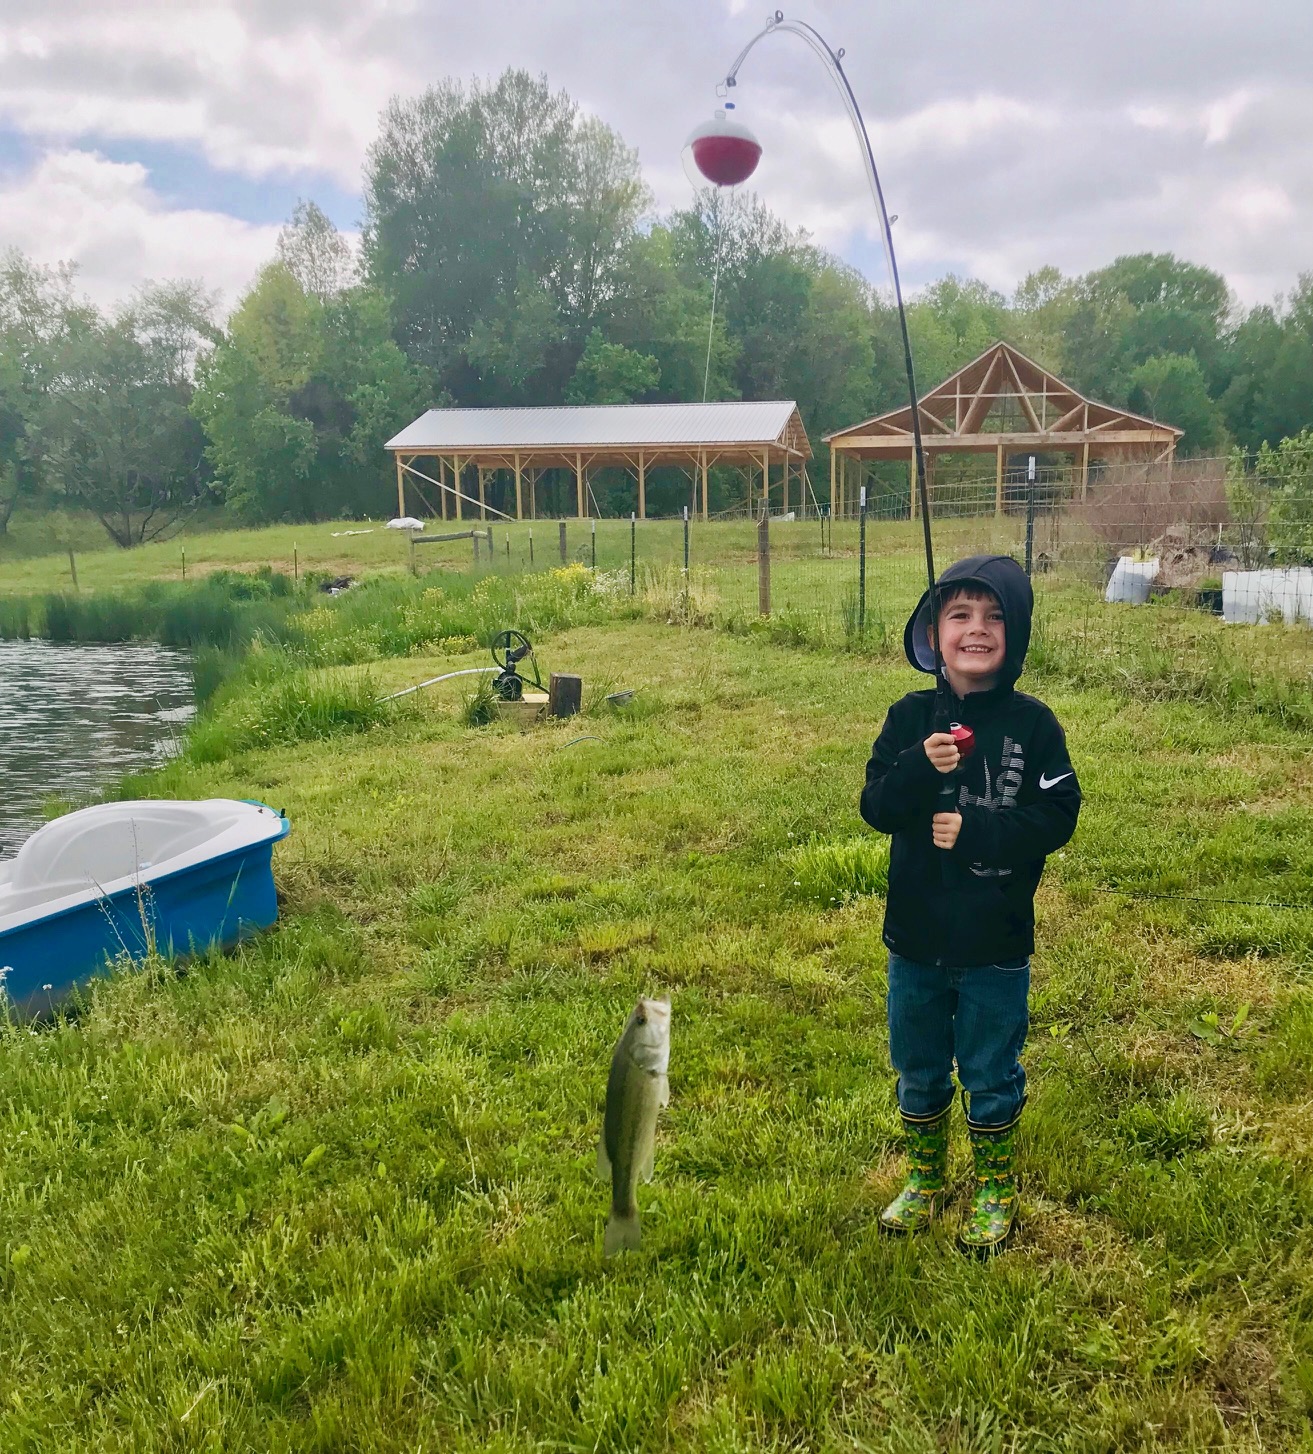 The Grandchildren Go Fishing at the Pond